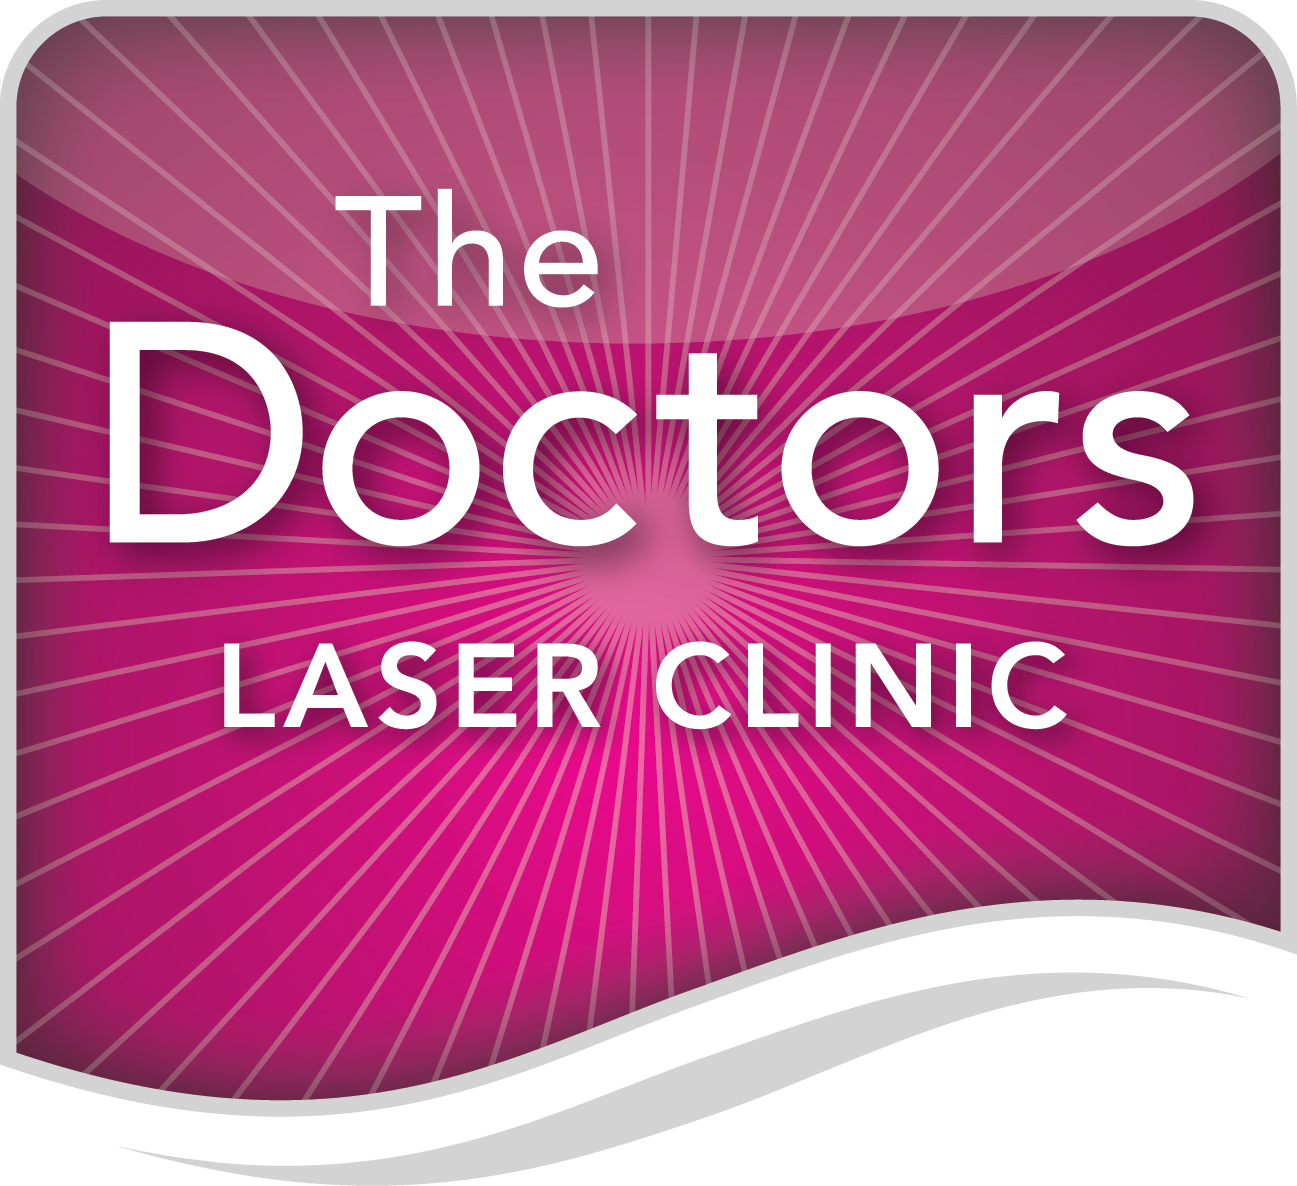 The Doctors Laser Clinic Ltd